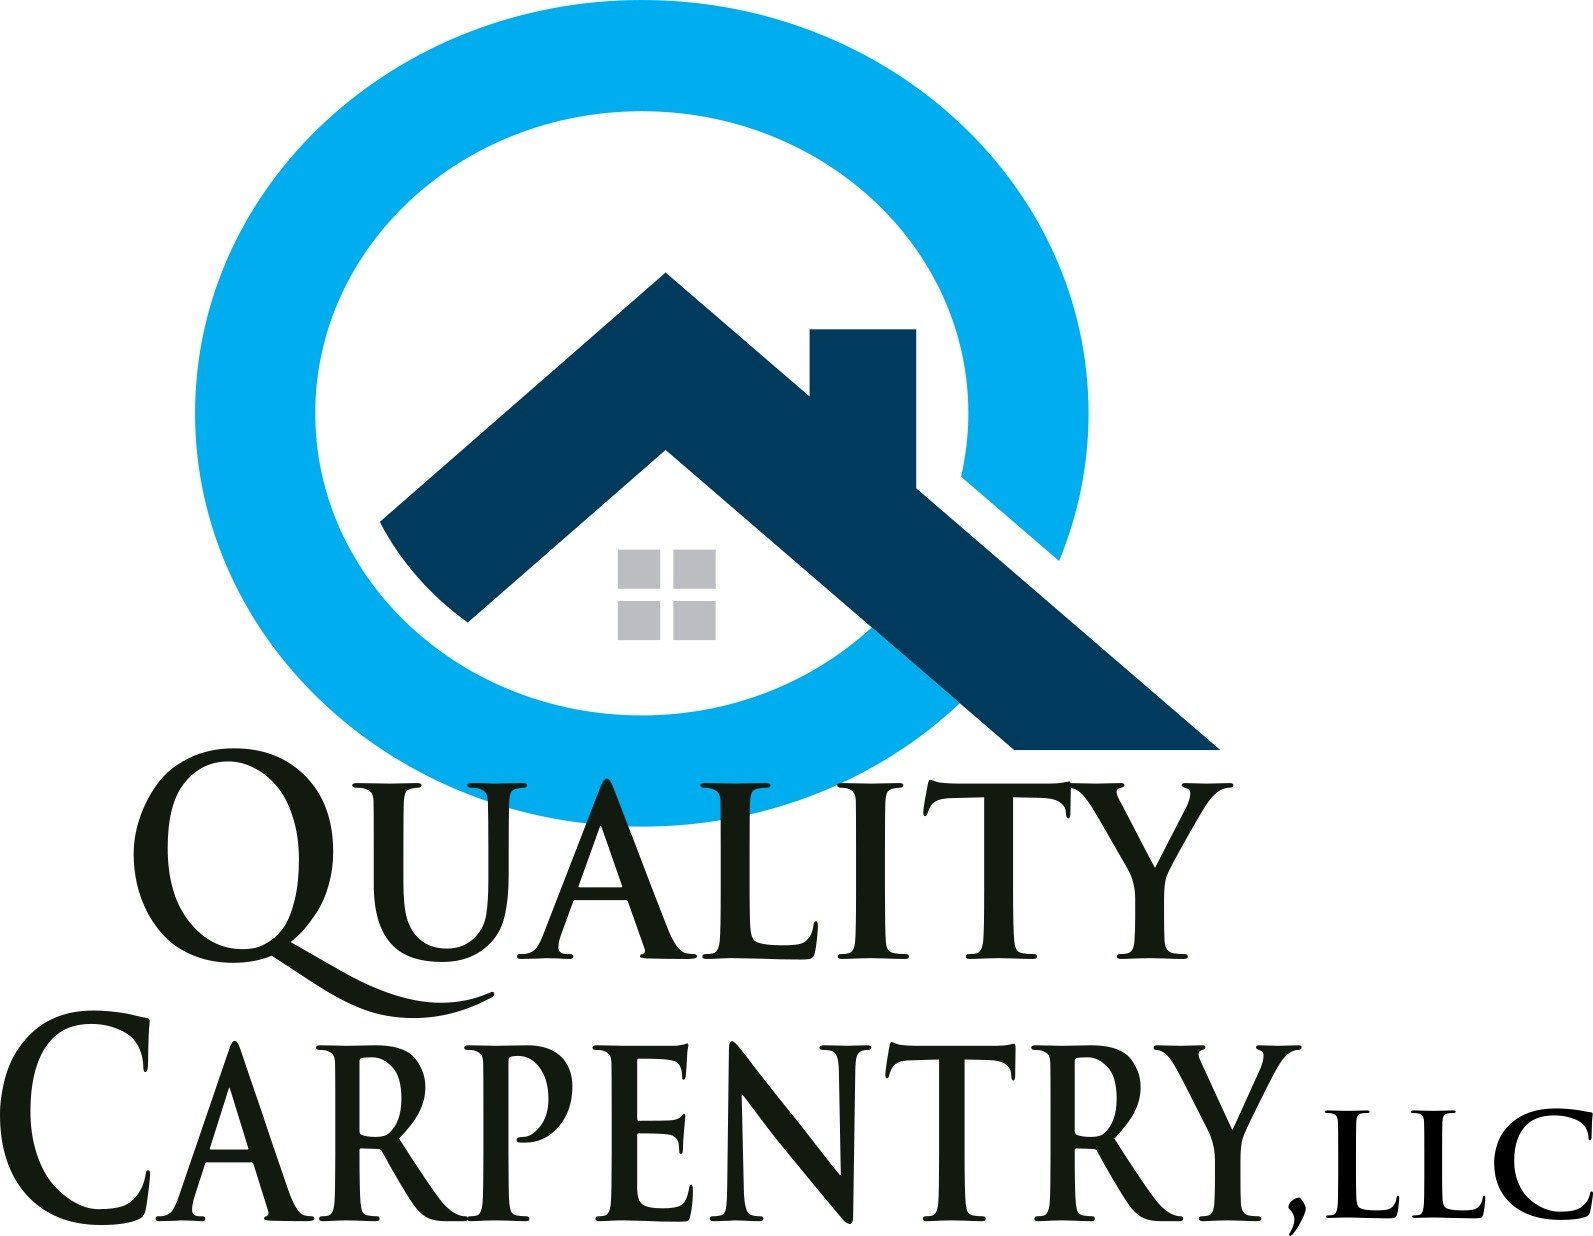 Quality Carpentry Services, LLC dba KJ's Custom Carpentry Logo